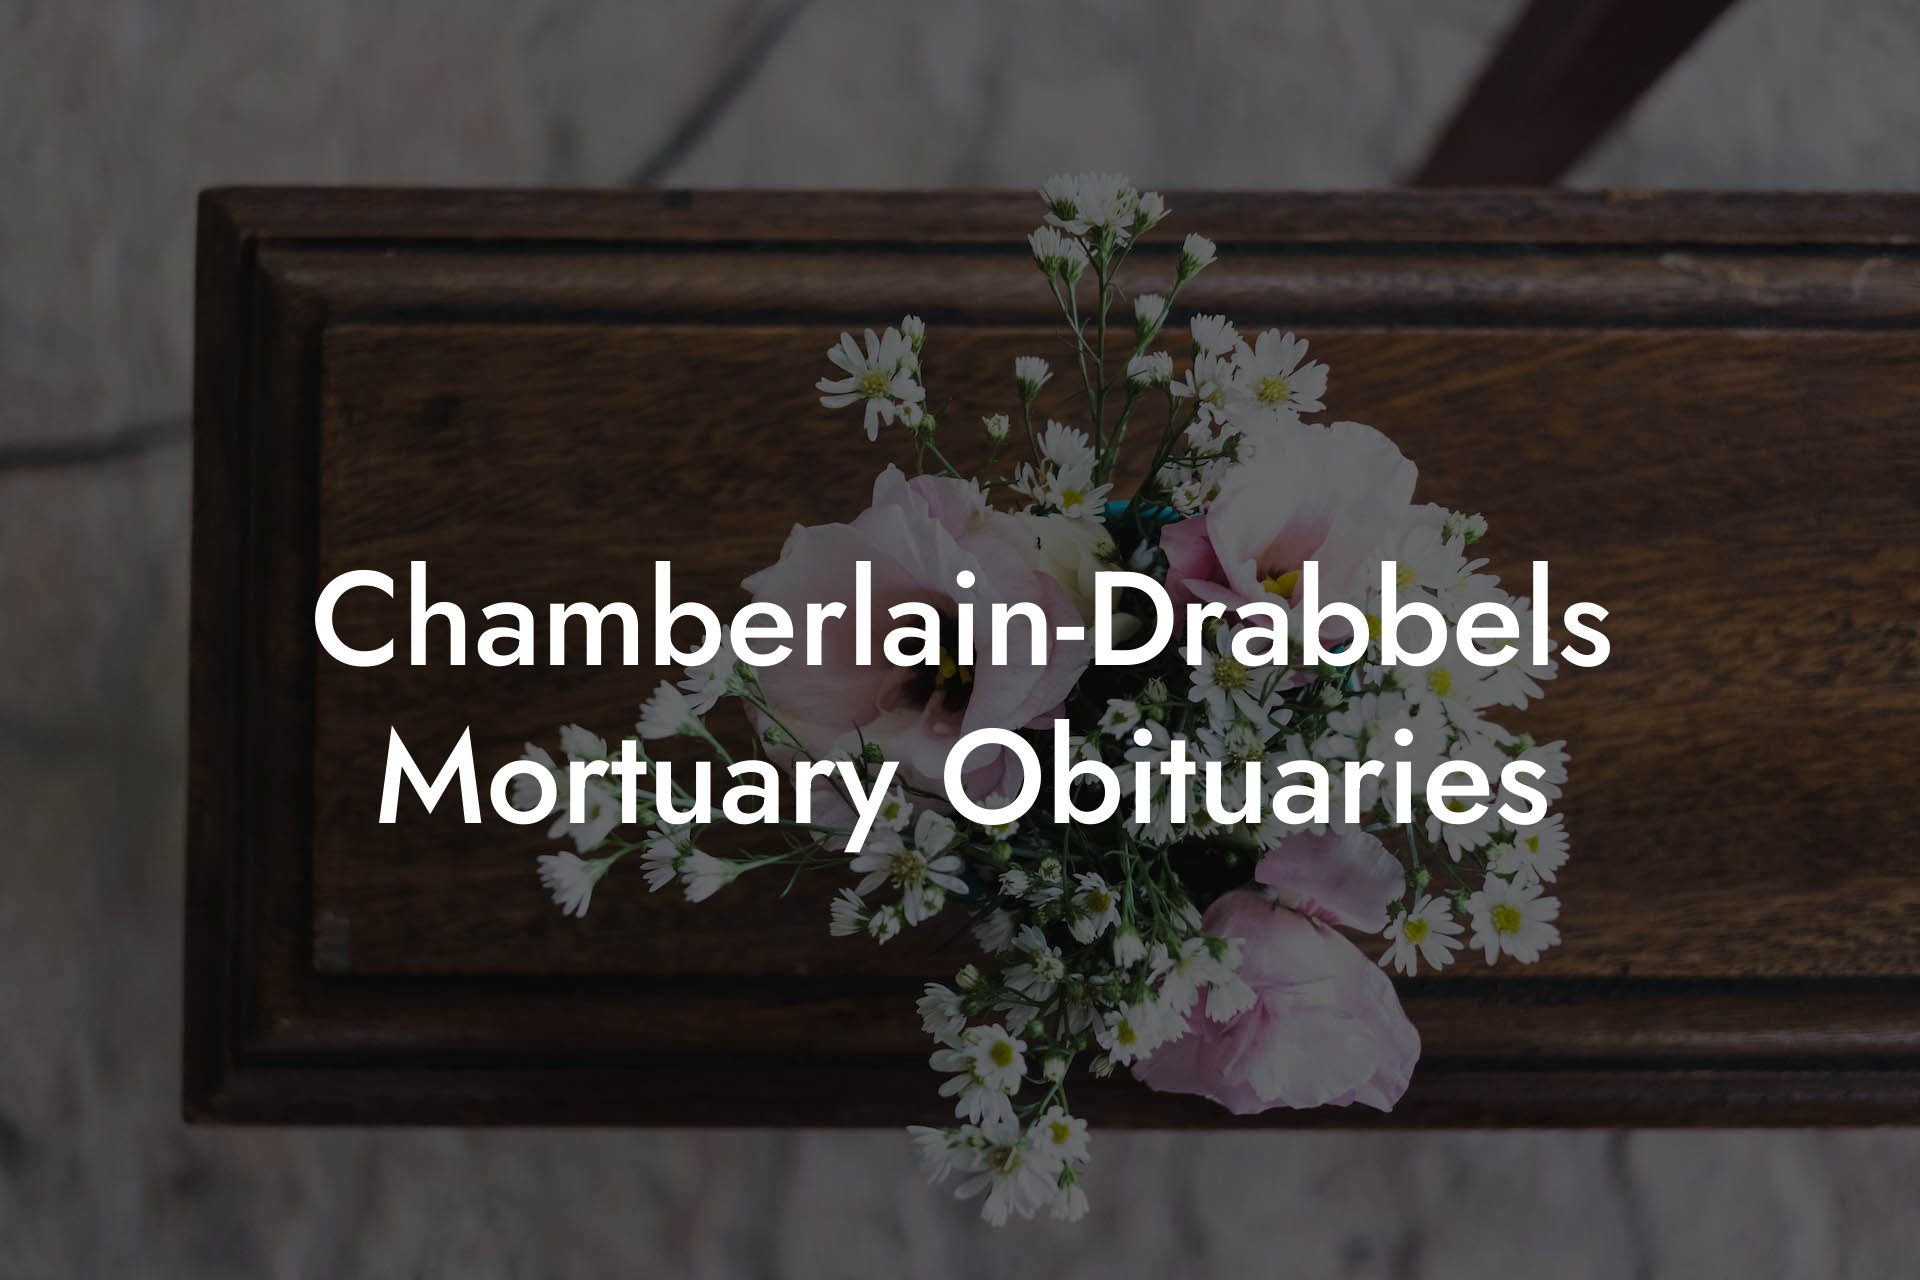 Chamberlain-Drabbels Mortuary Obituaries